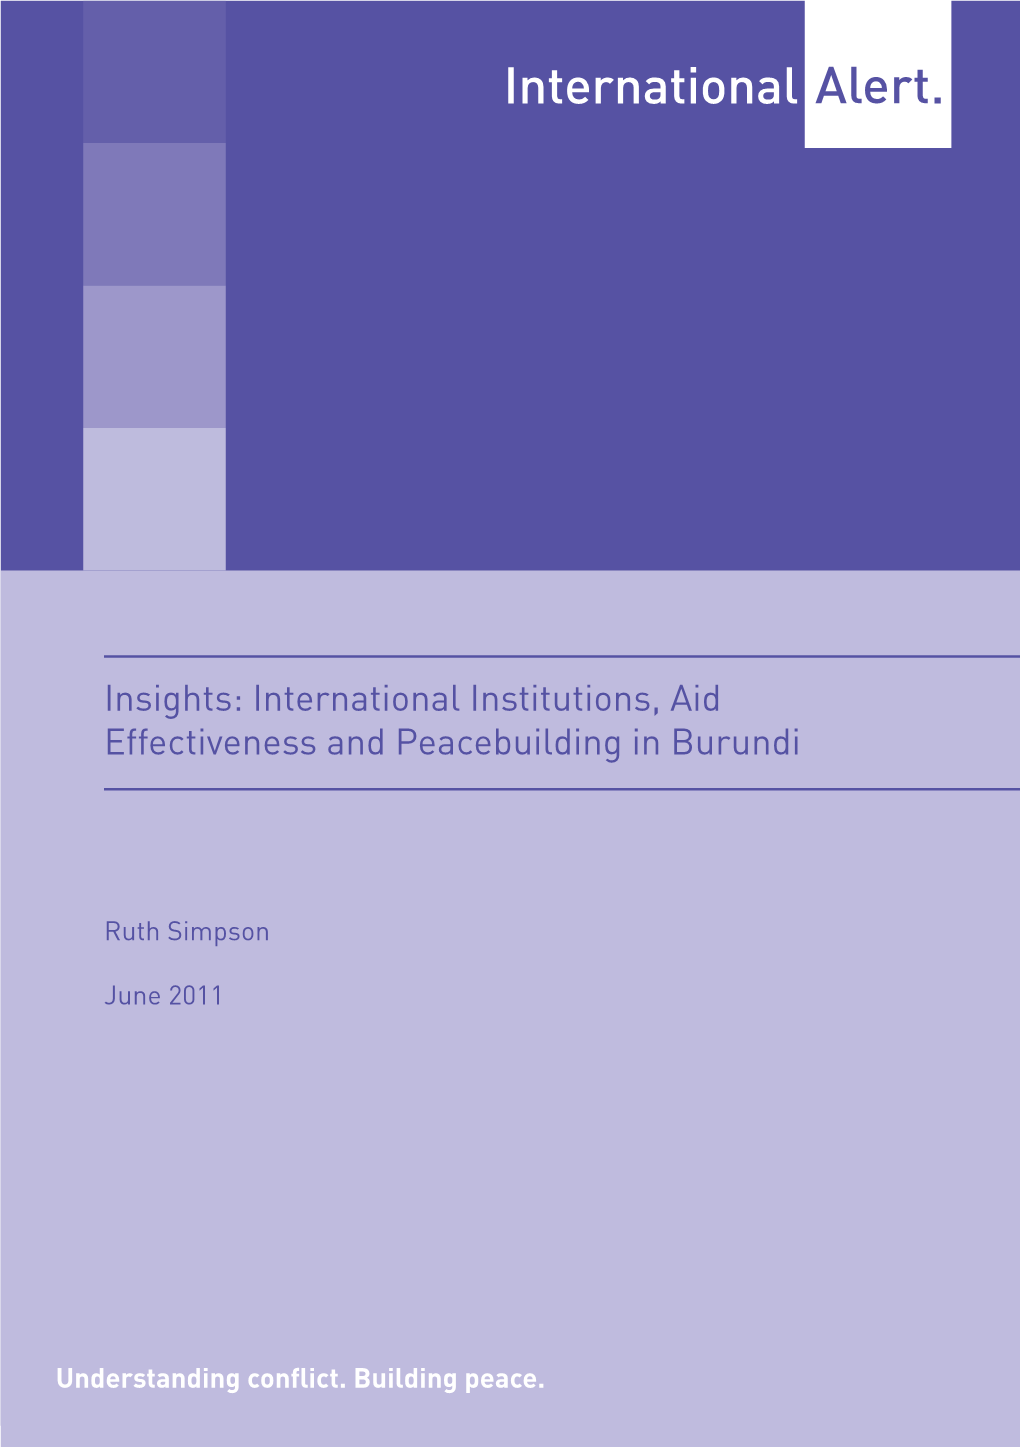 Insights: International Institutions, Aid Effectiveness and Peacebuilding in Burundi